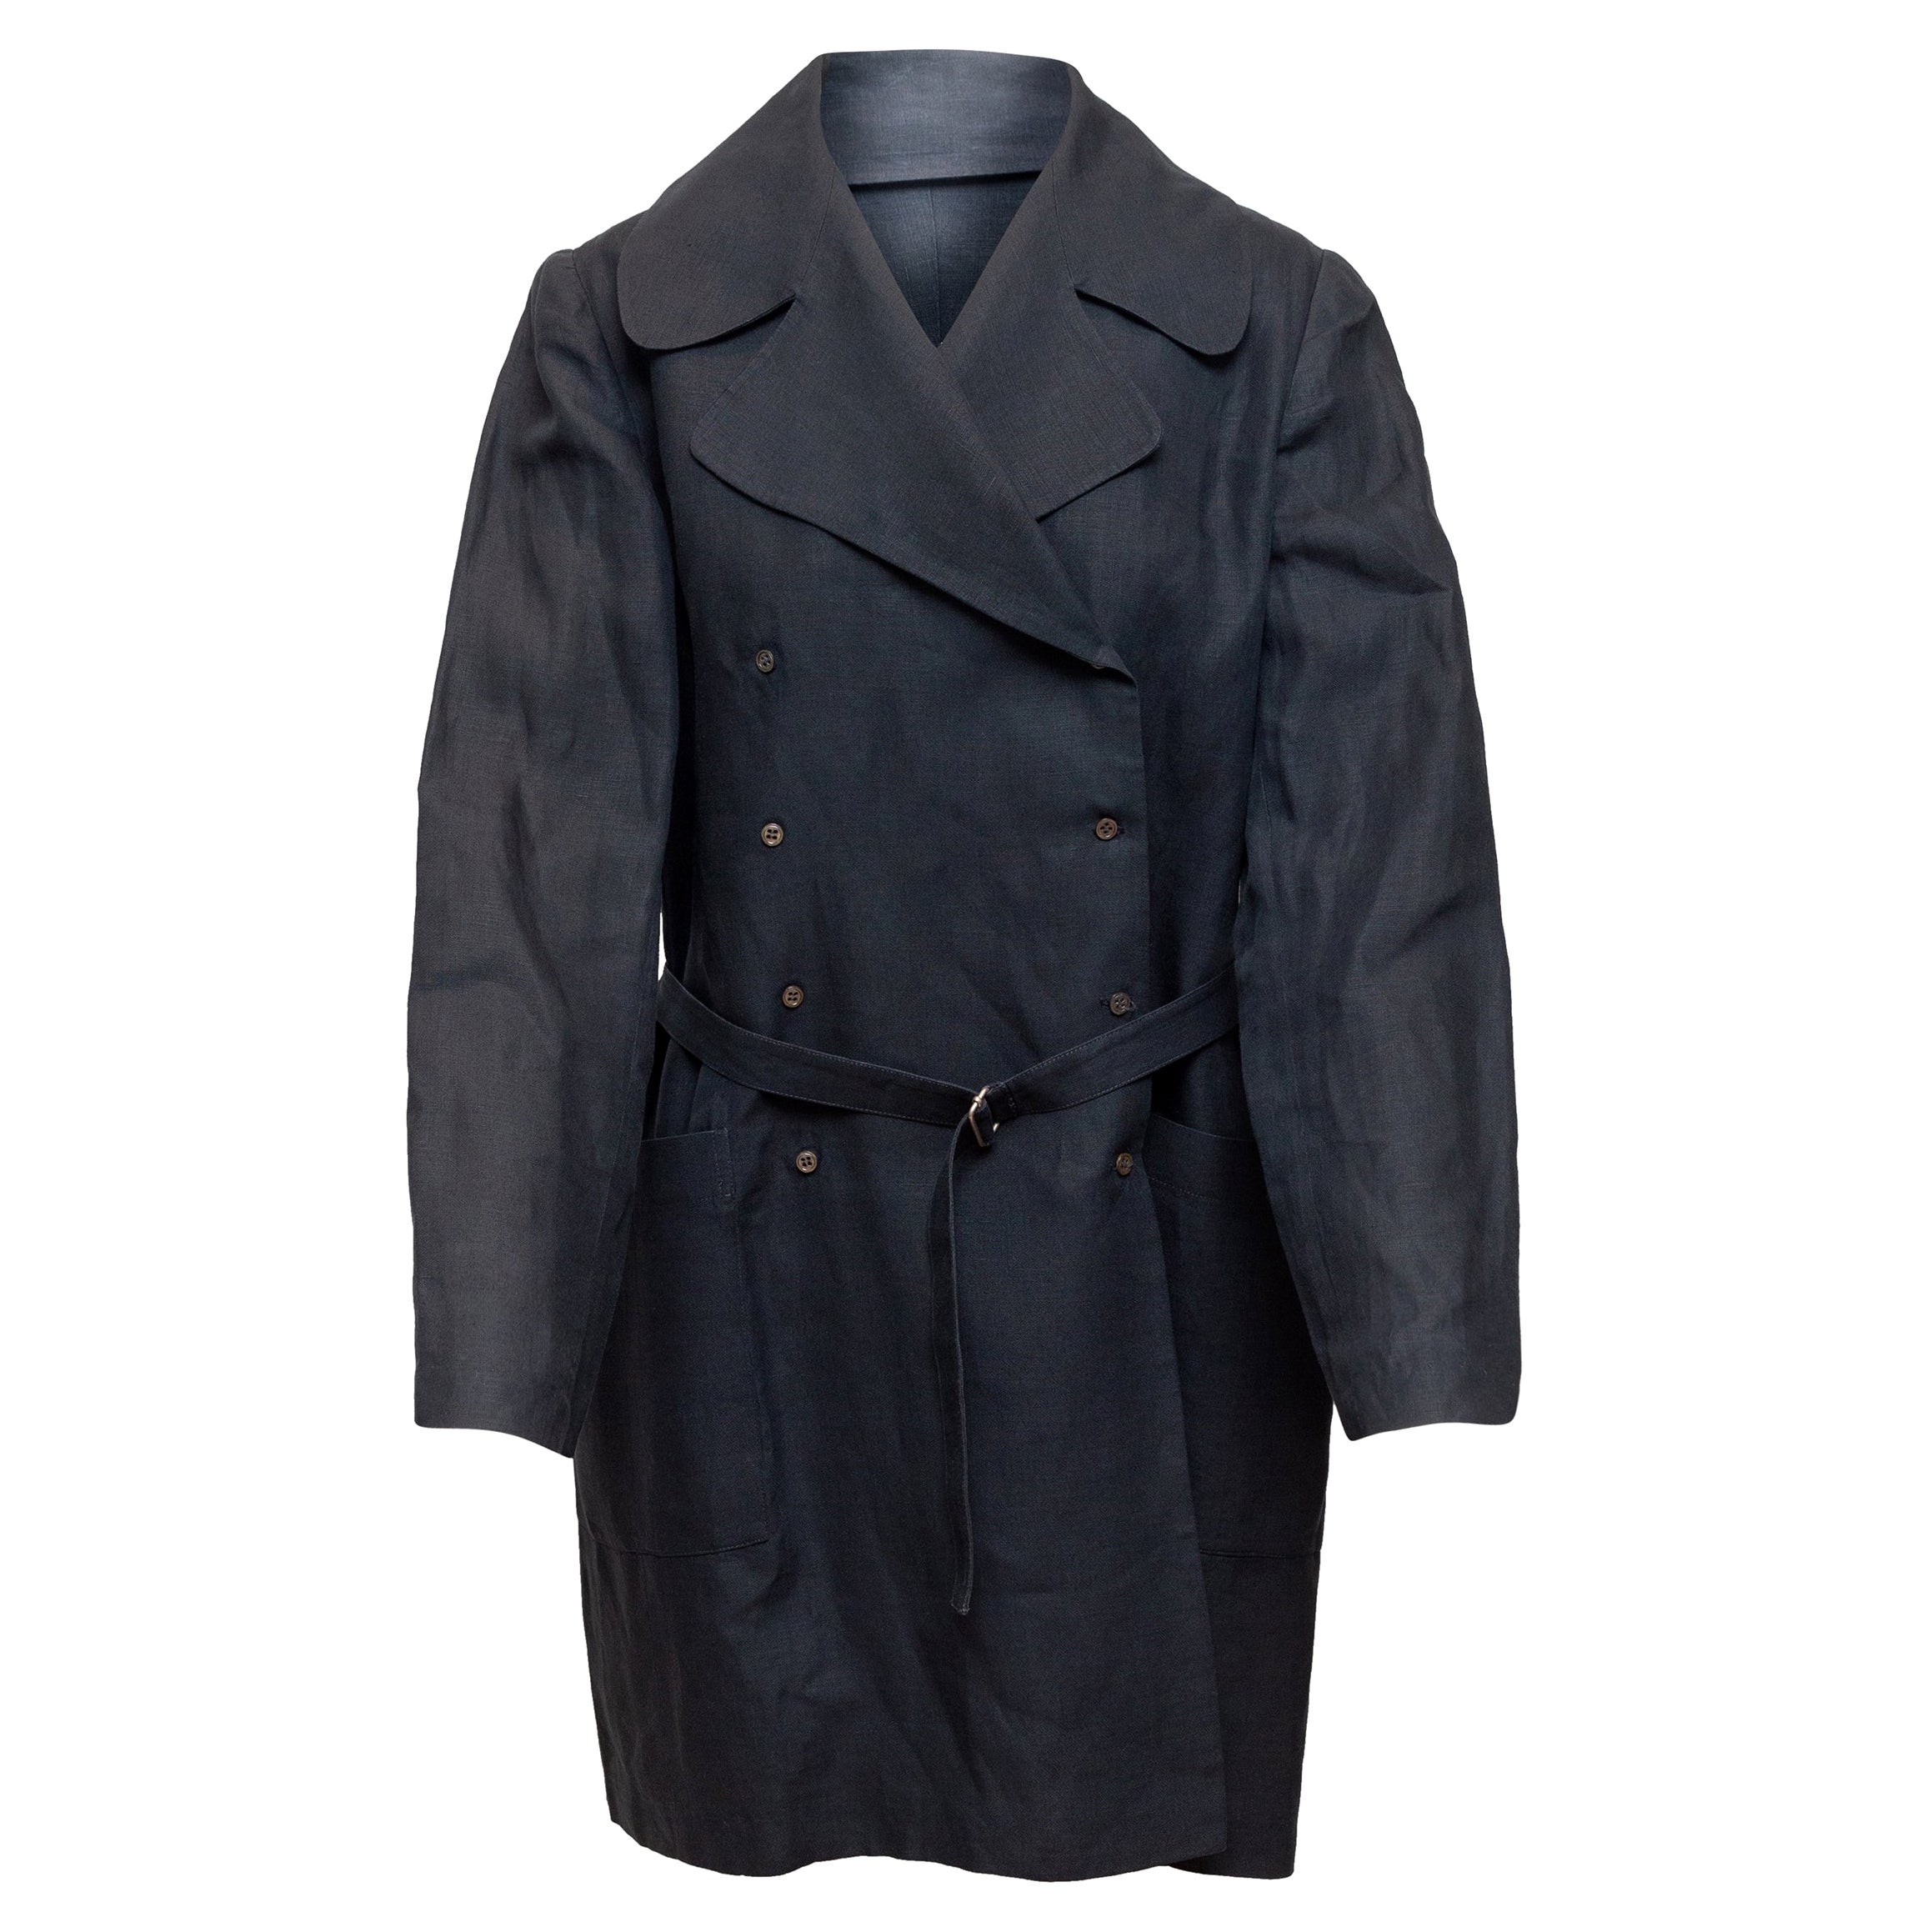 Morgane Le Fay Navy Linen Double-Breasted Coat